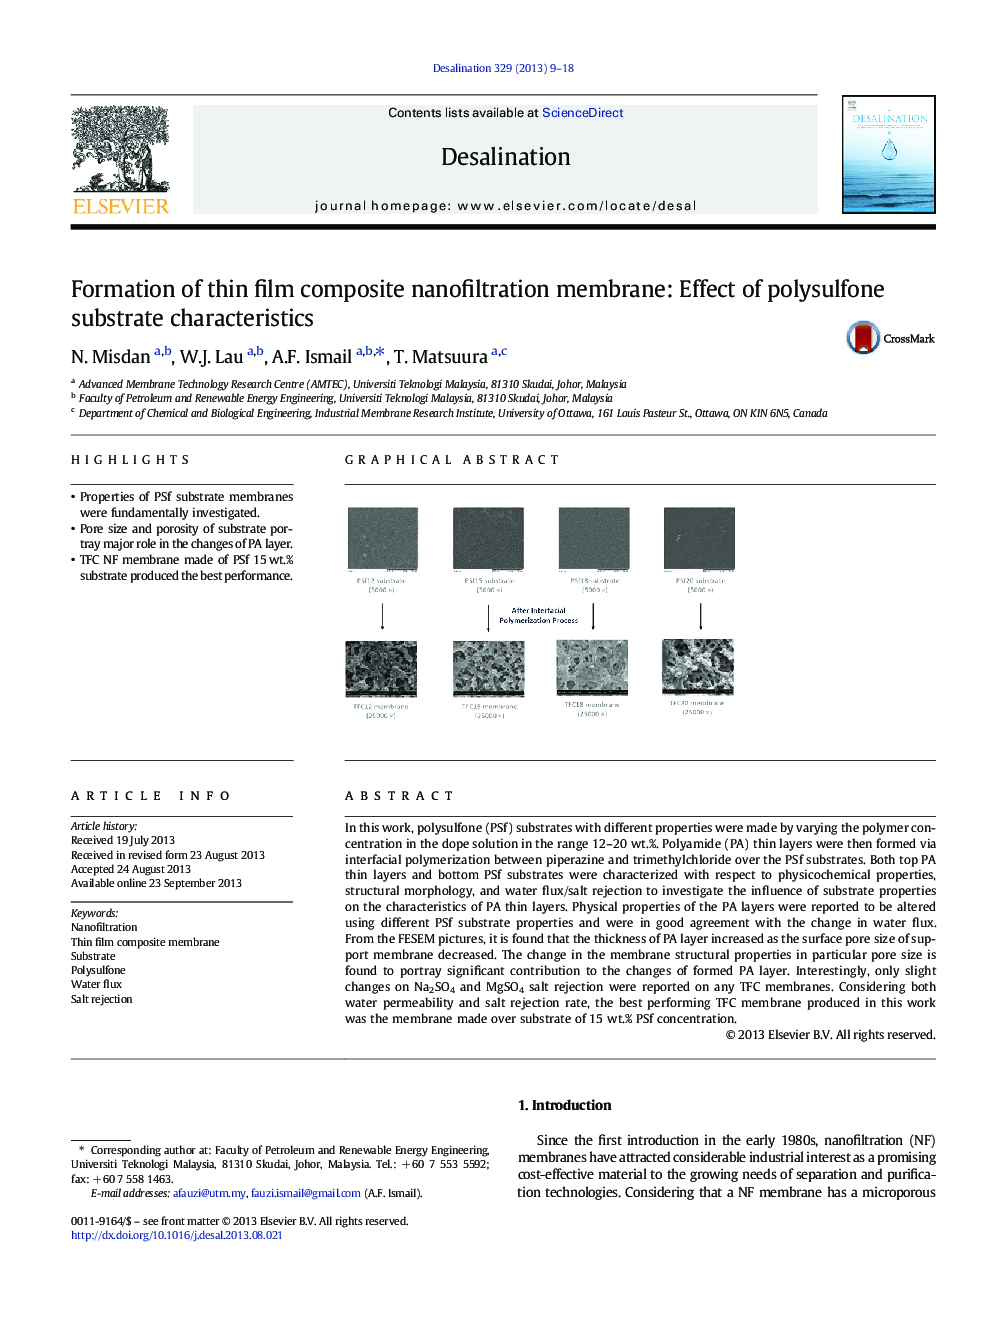 Formation of thin film composite nanofiltration membrane: Effect of polysulfone substrate characteristics